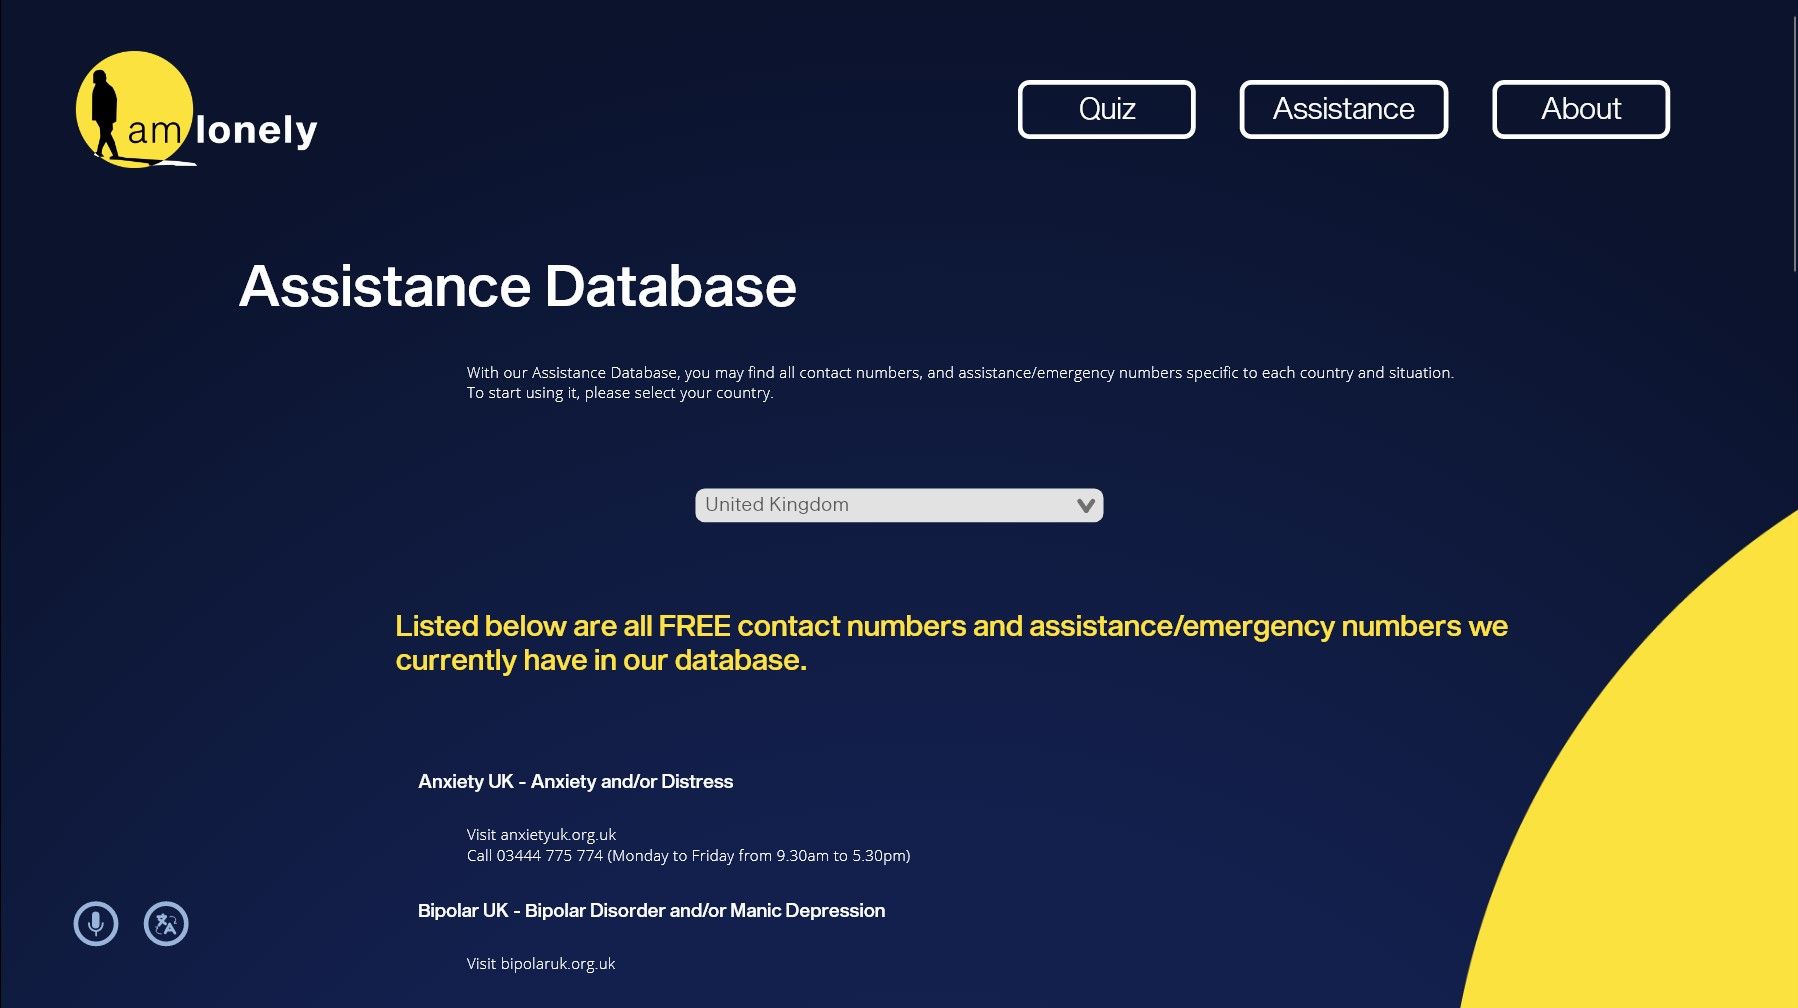 iamlonely Assistance Database